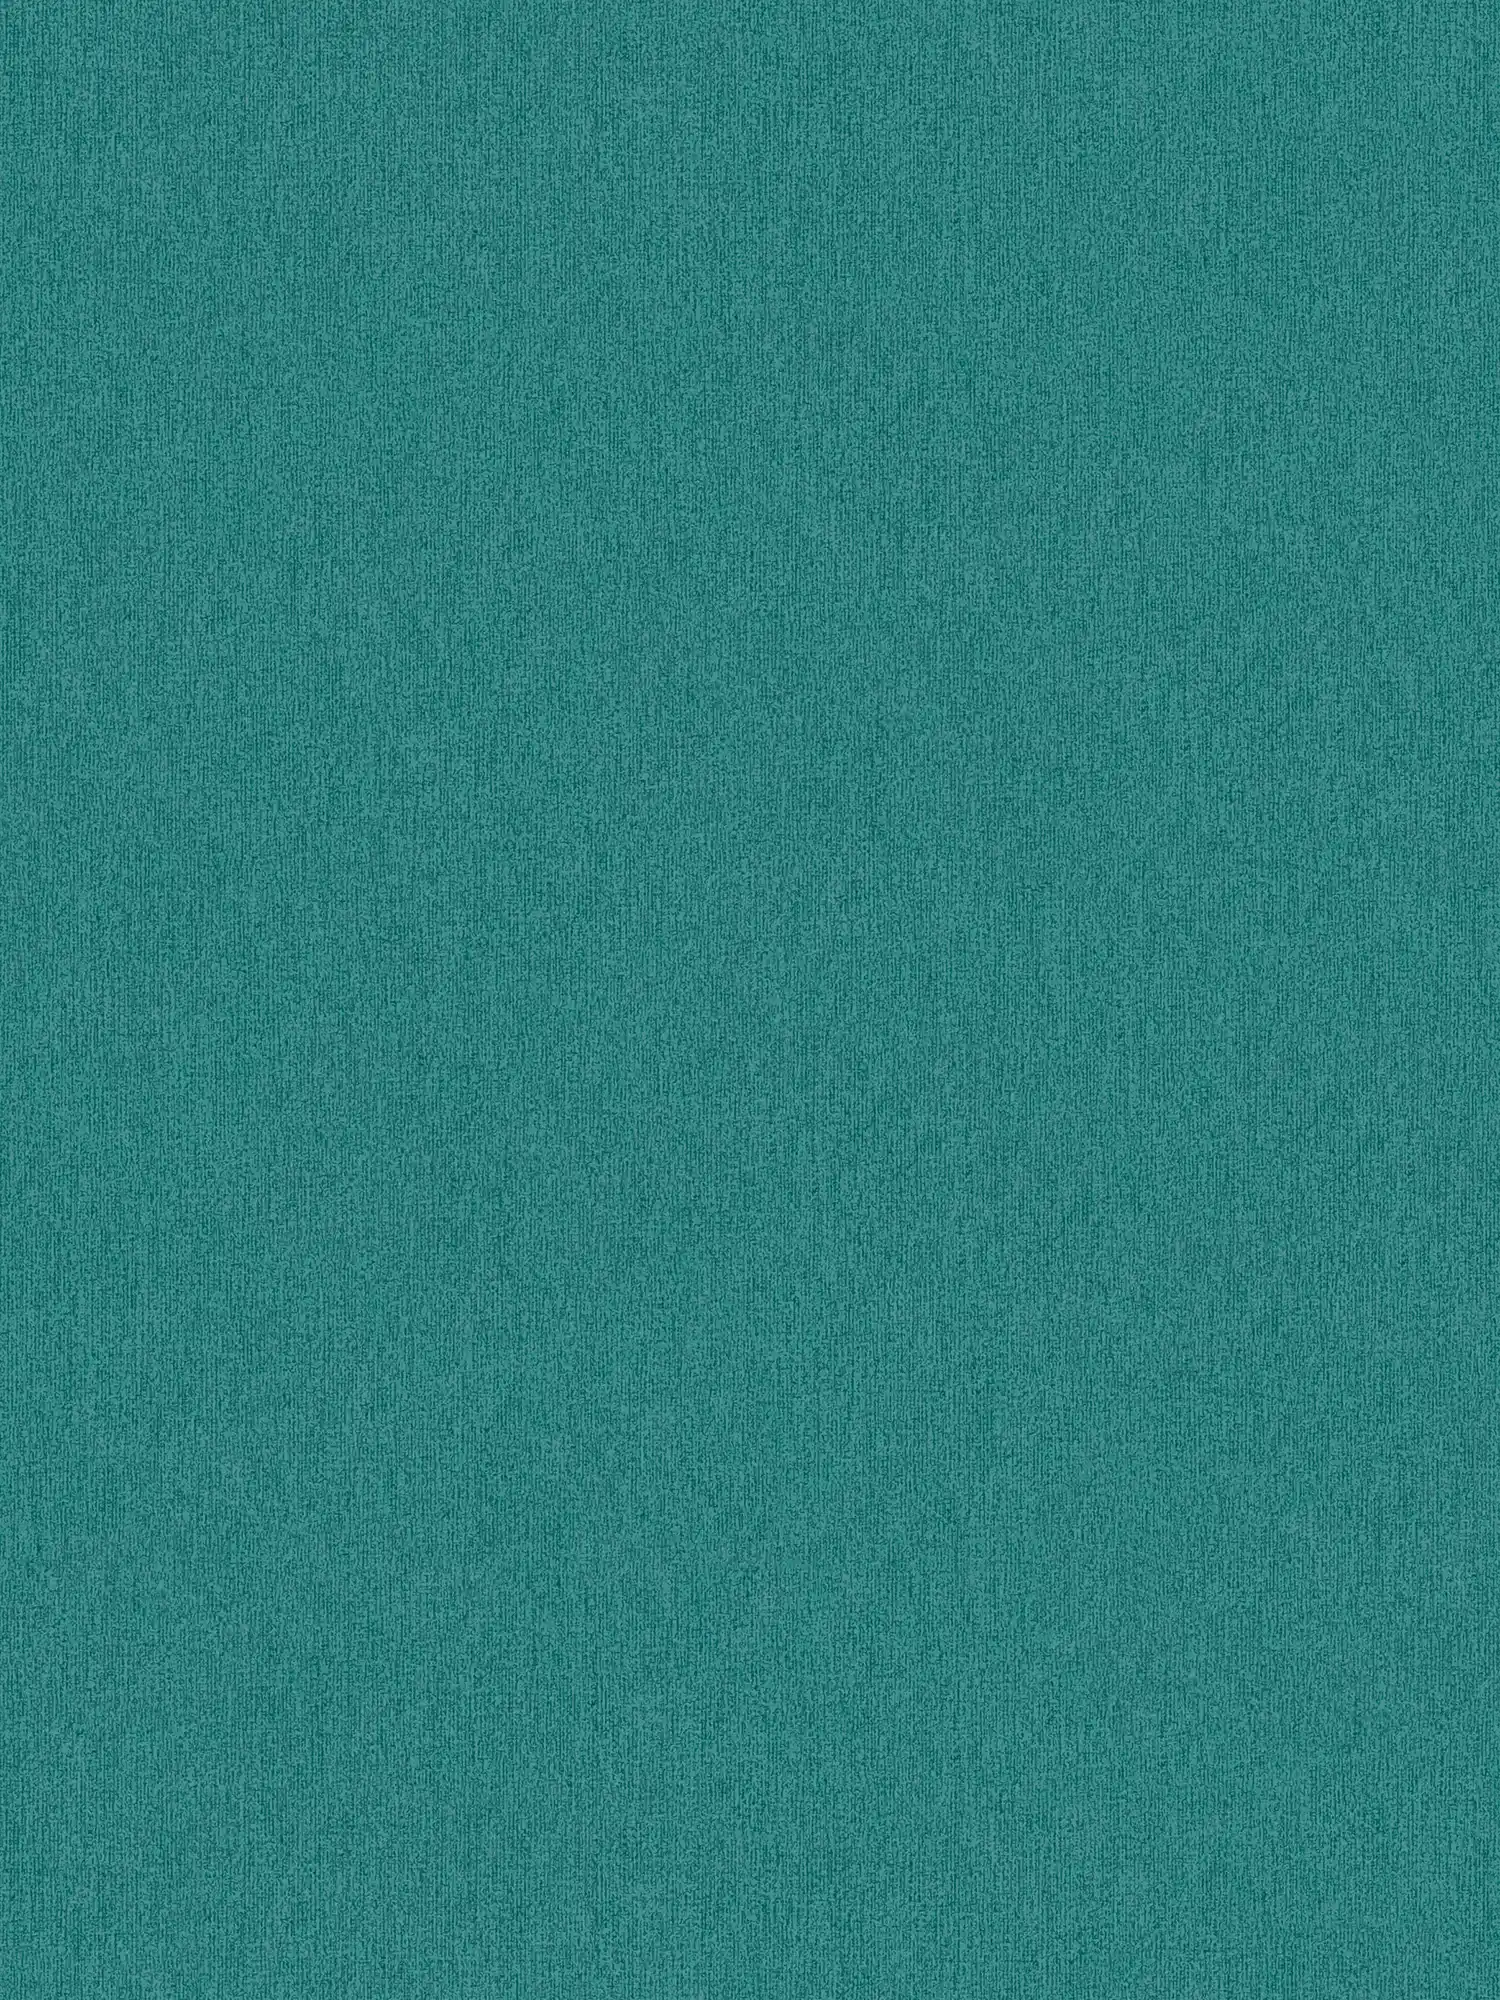 Plain wallpaper in matt & plain with textured look - petrol, blue
